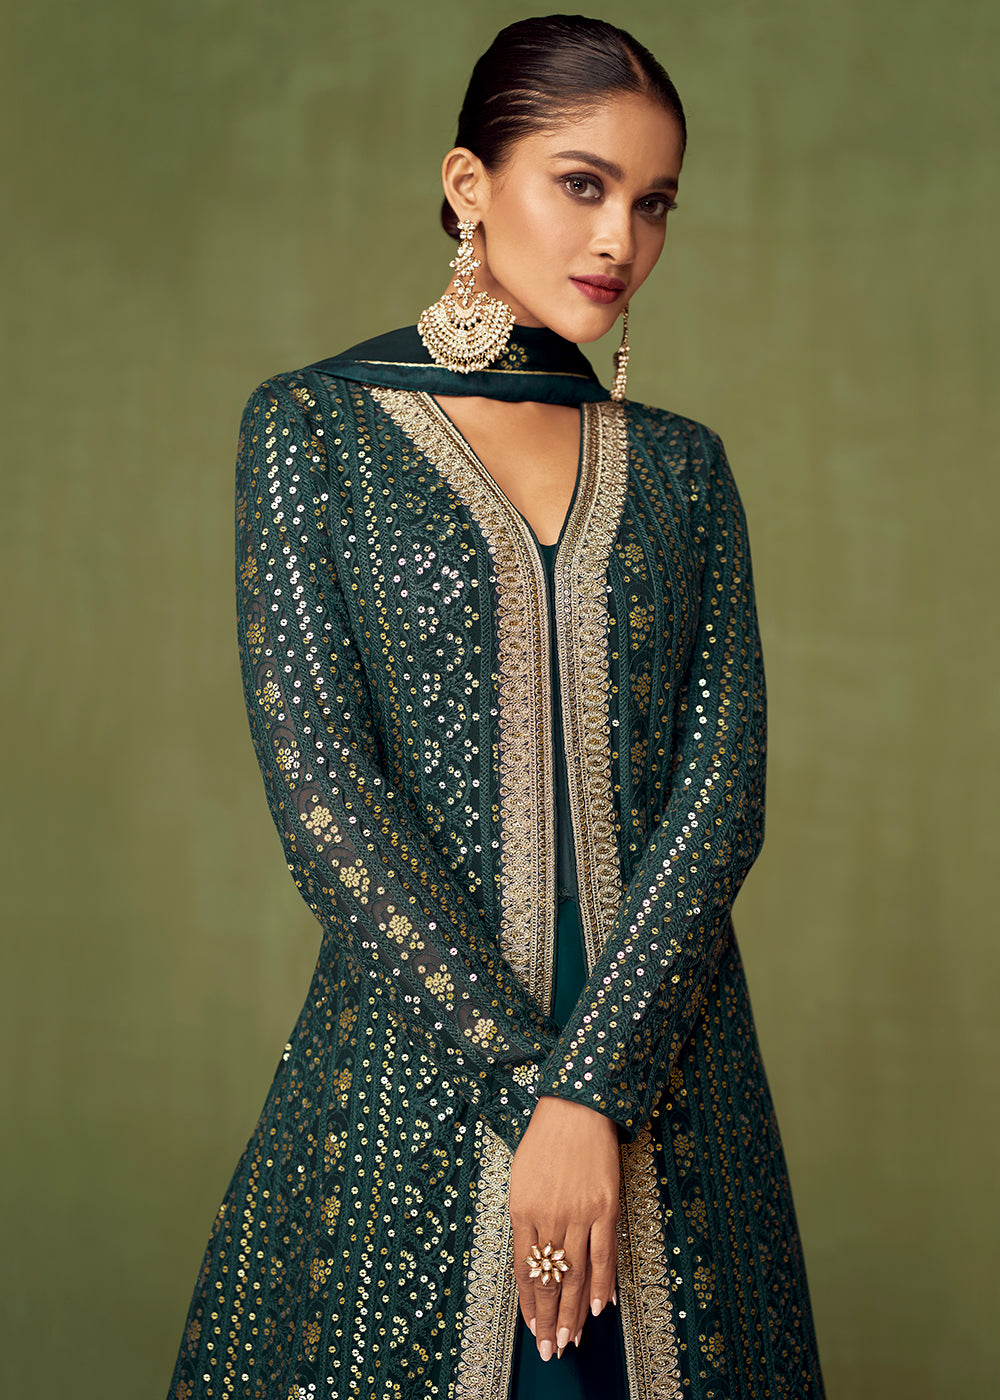 Buy Now Bottle Green Georgette Wedding Party Skirt Anarkali Suit Online in USA, UK, Australia, New Zealand, Canada & Worldwide at Empress Clothing. 